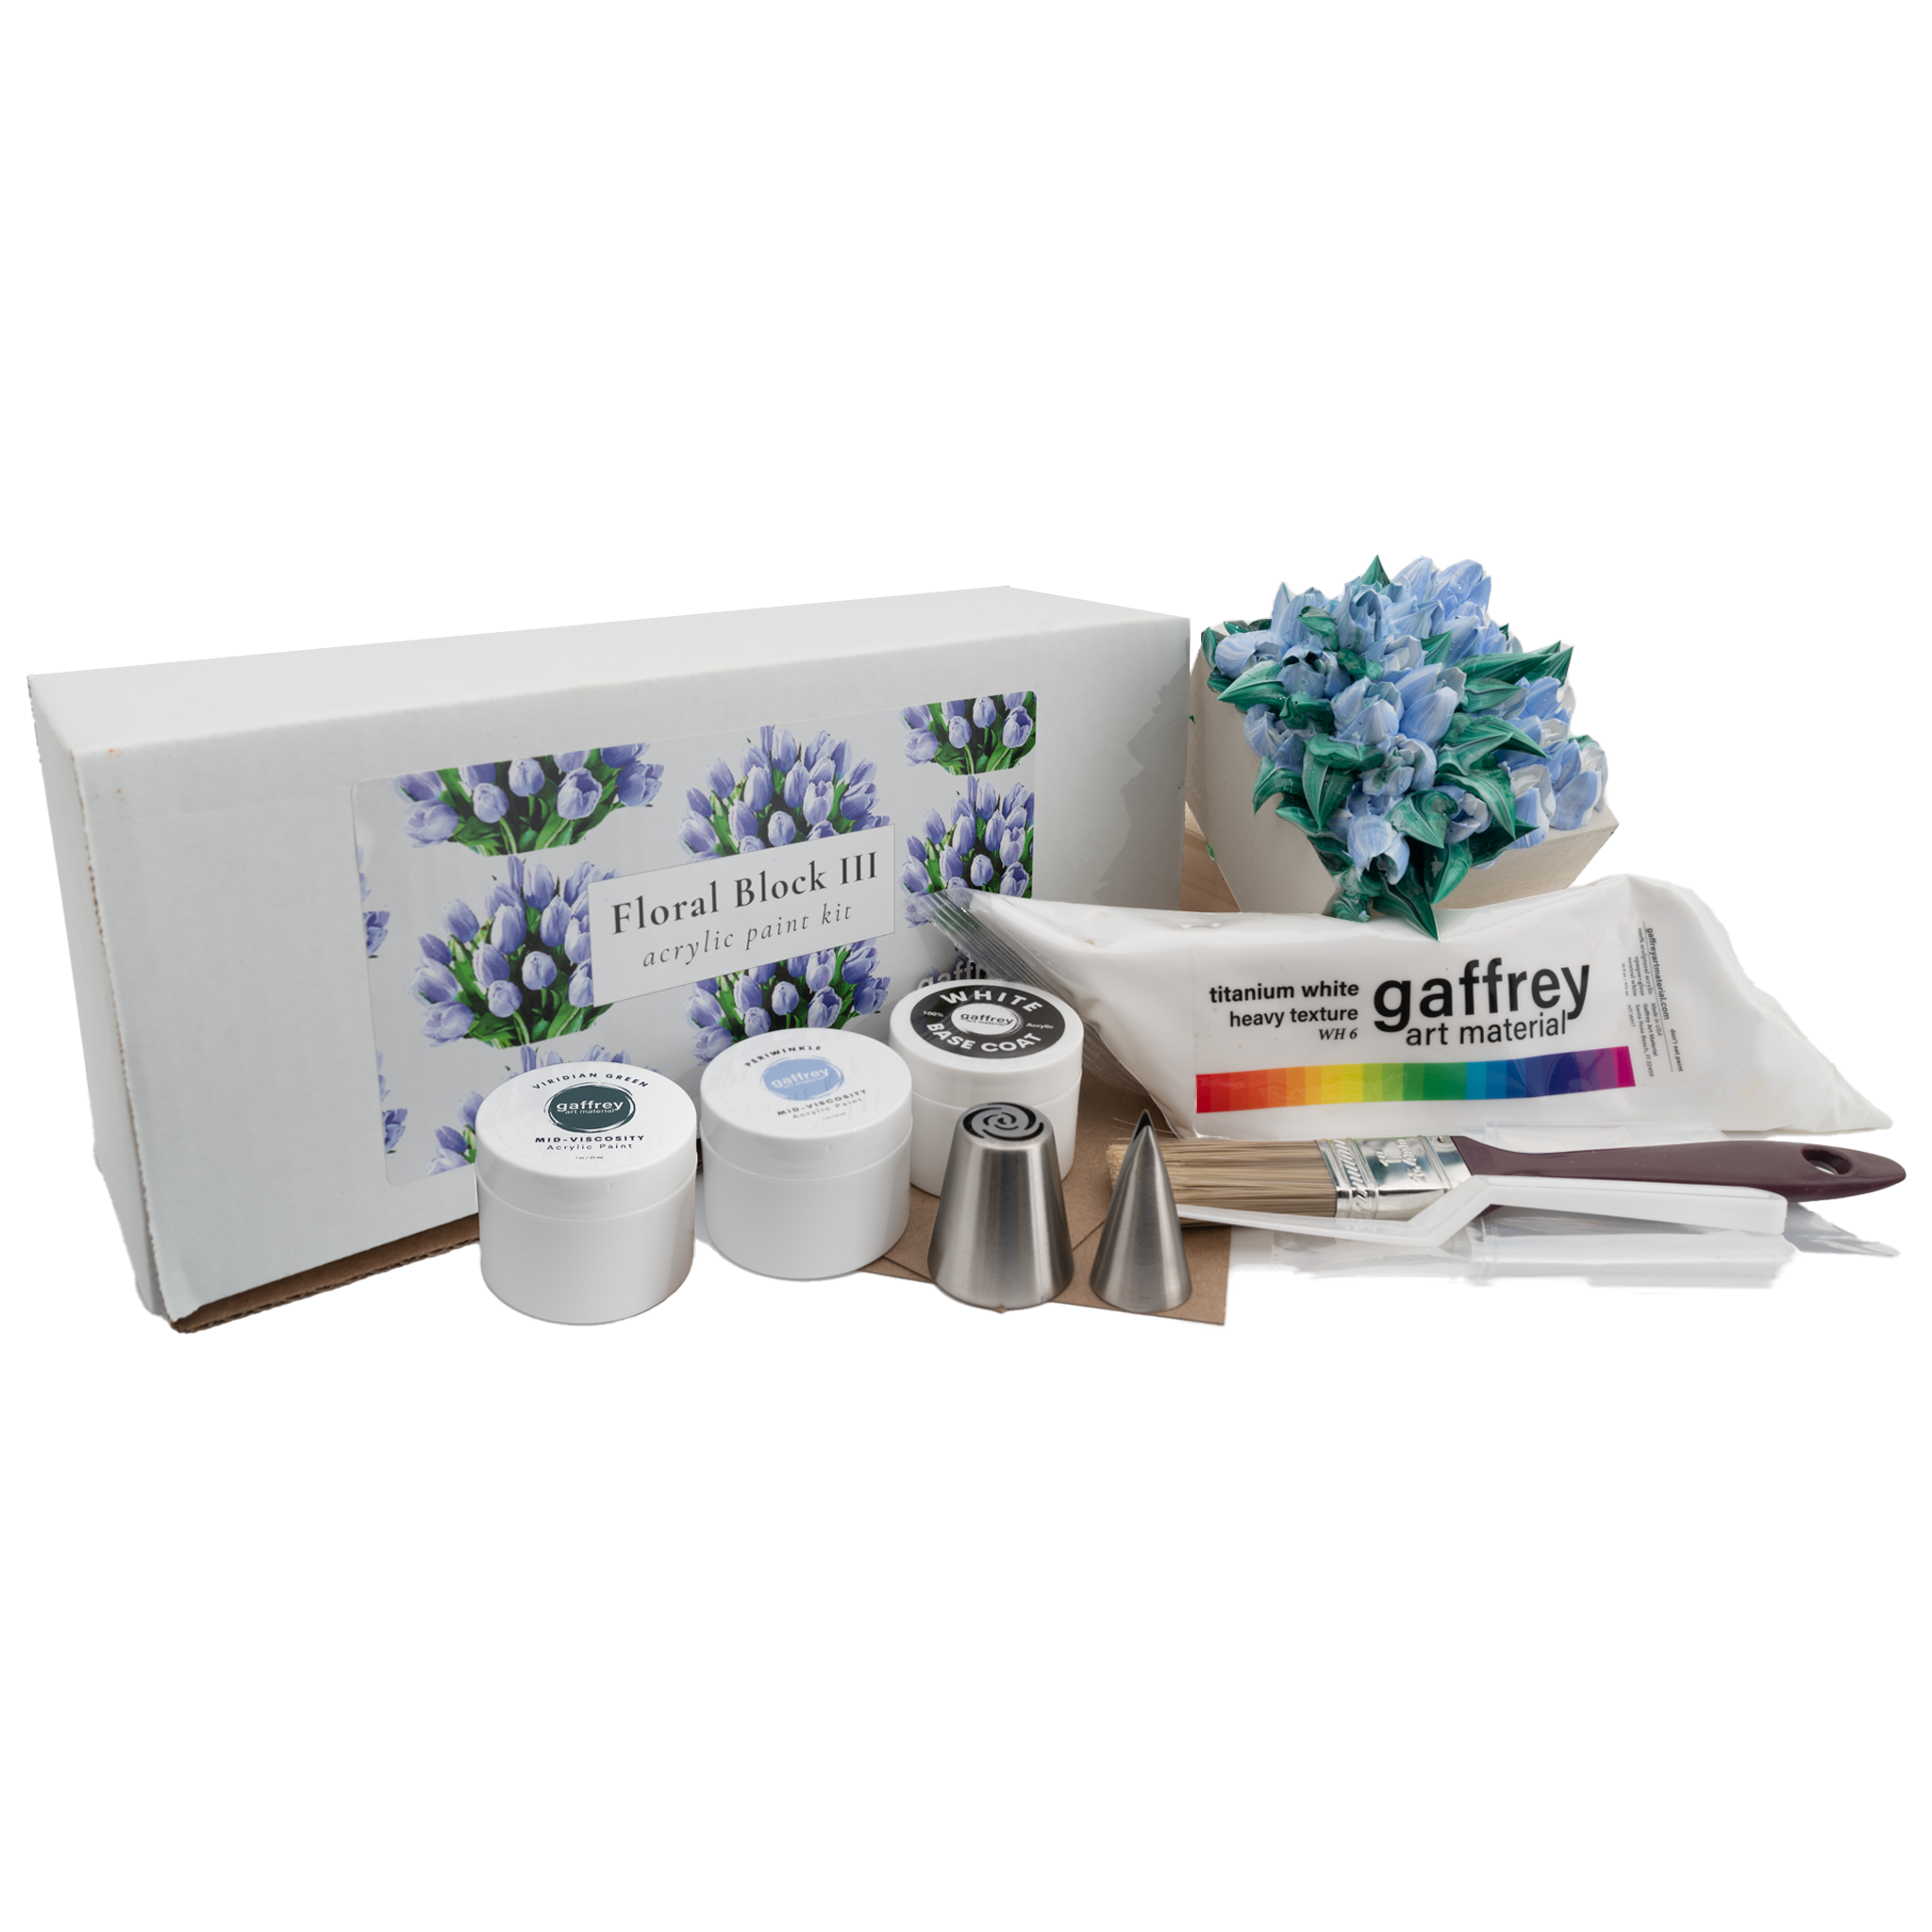 Sculpted Floral Block Acrylic Paint Kit - Gaffrey Art Material